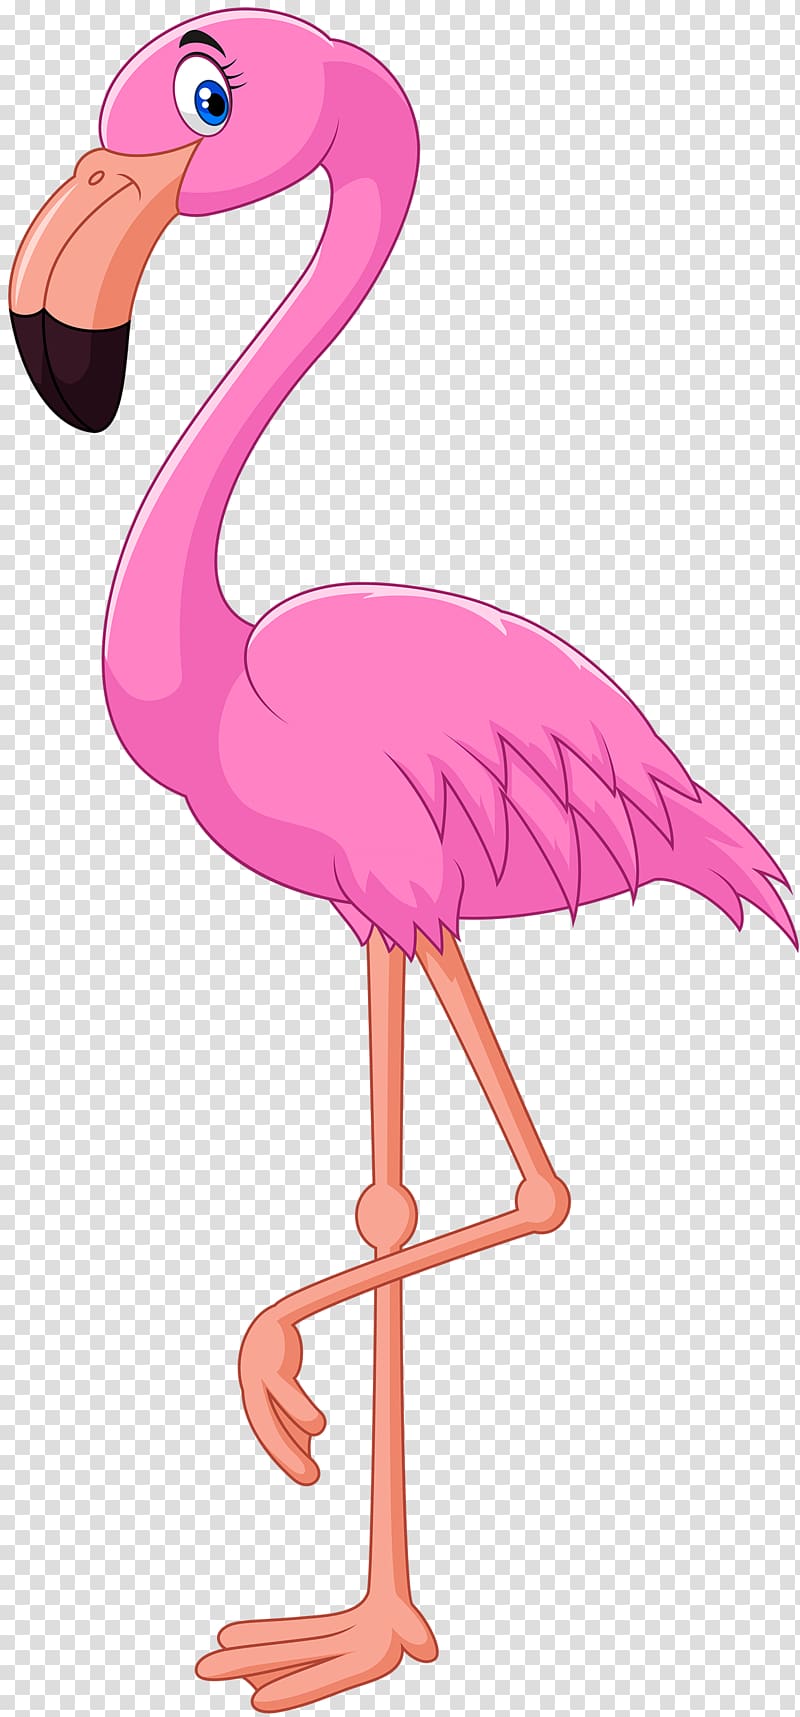 Free download | Pink flamingo illustration, Cartoon Flamingo Bird Illustration, Flamingo